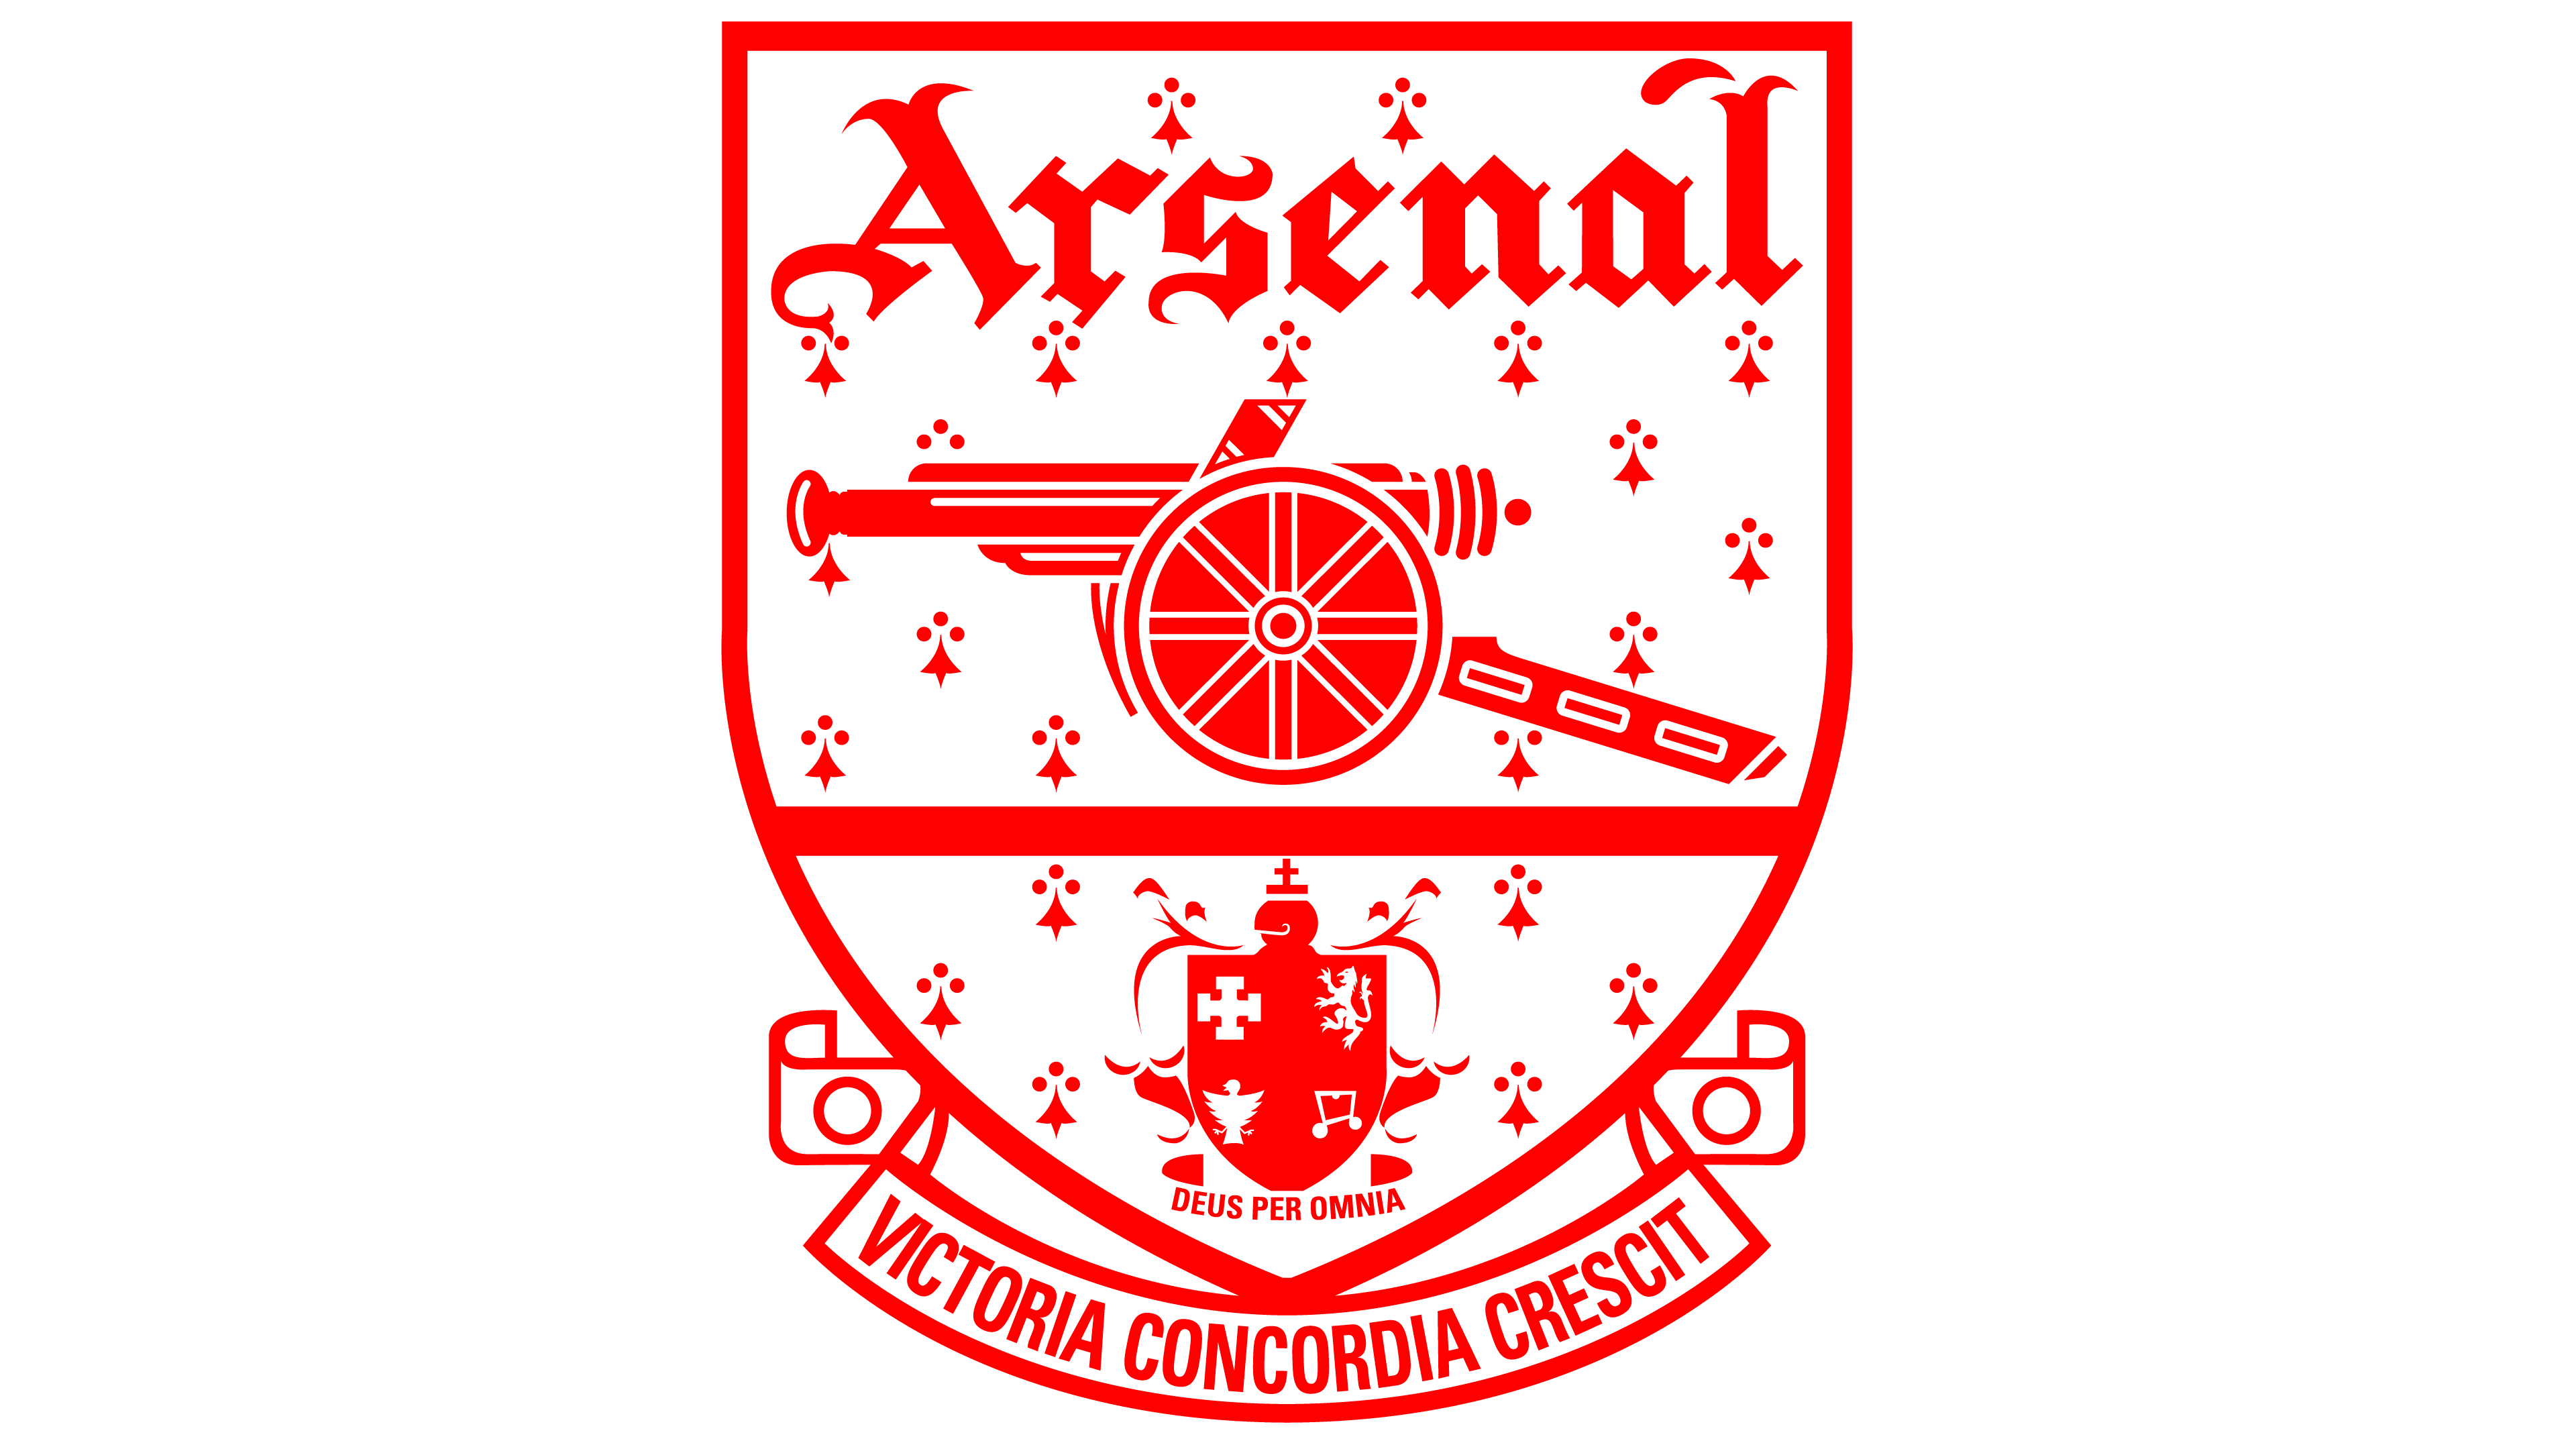 Arsenal F.C LOGO png immagine